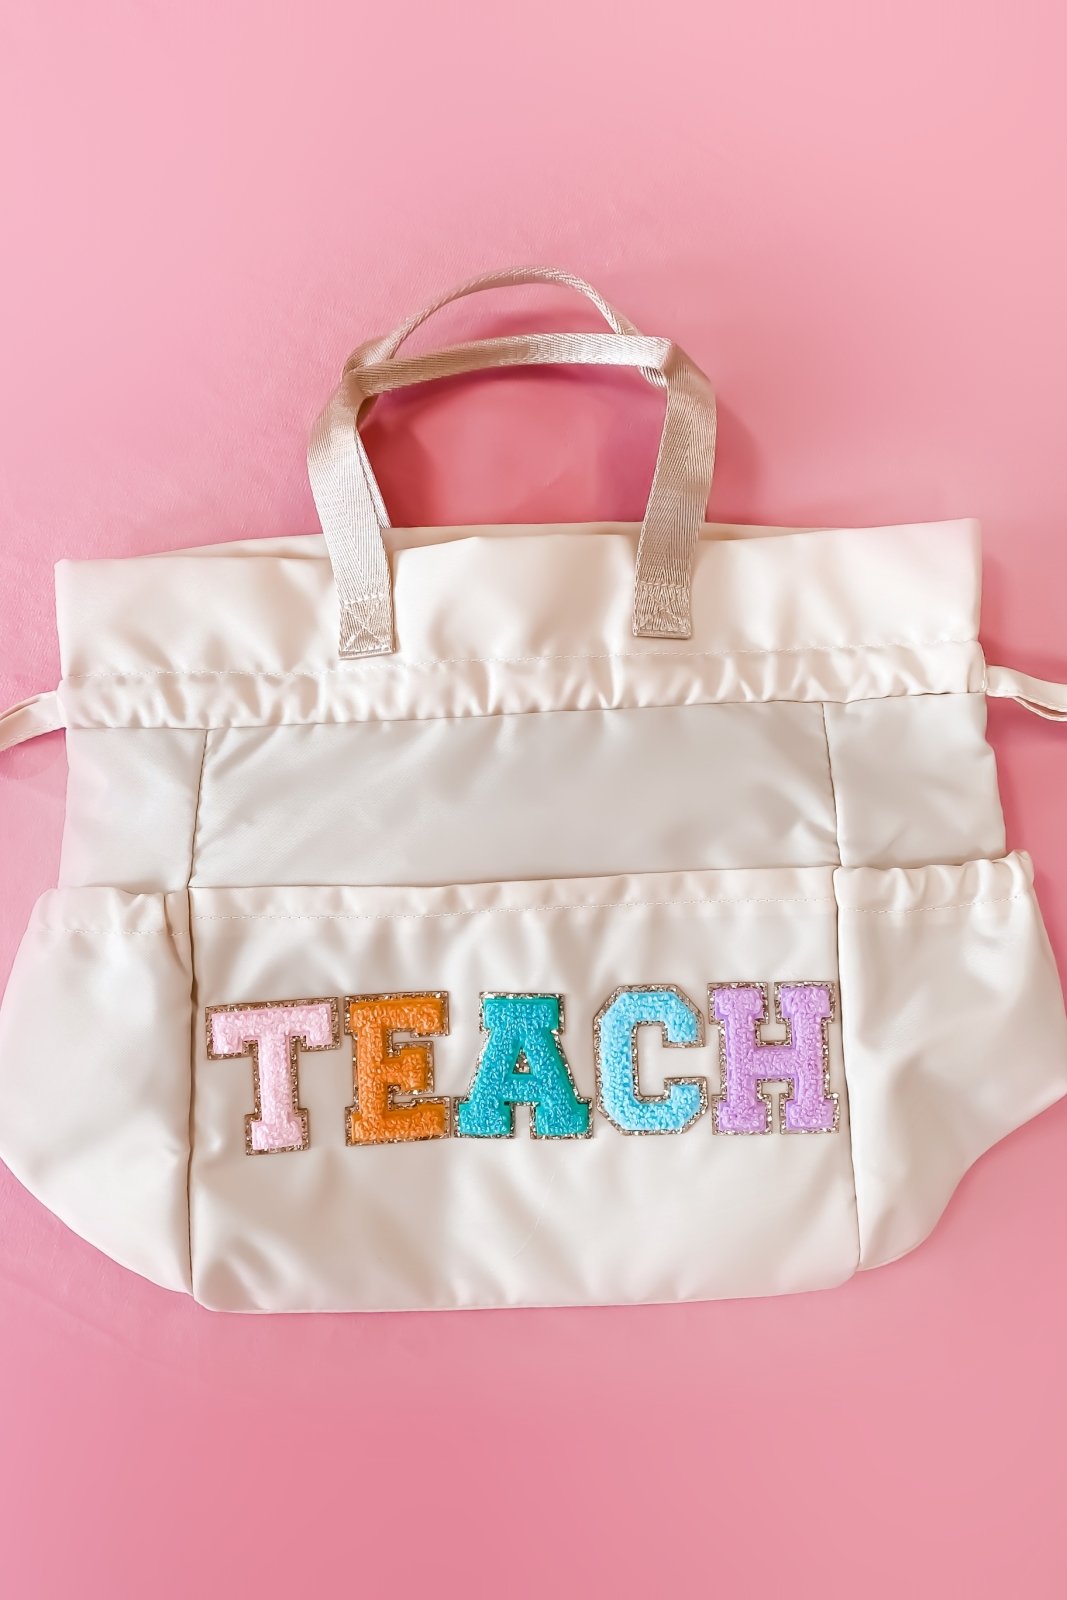 Cream TEACH Patch Lunch Bag - GYTO Collective - Get Your Teach On